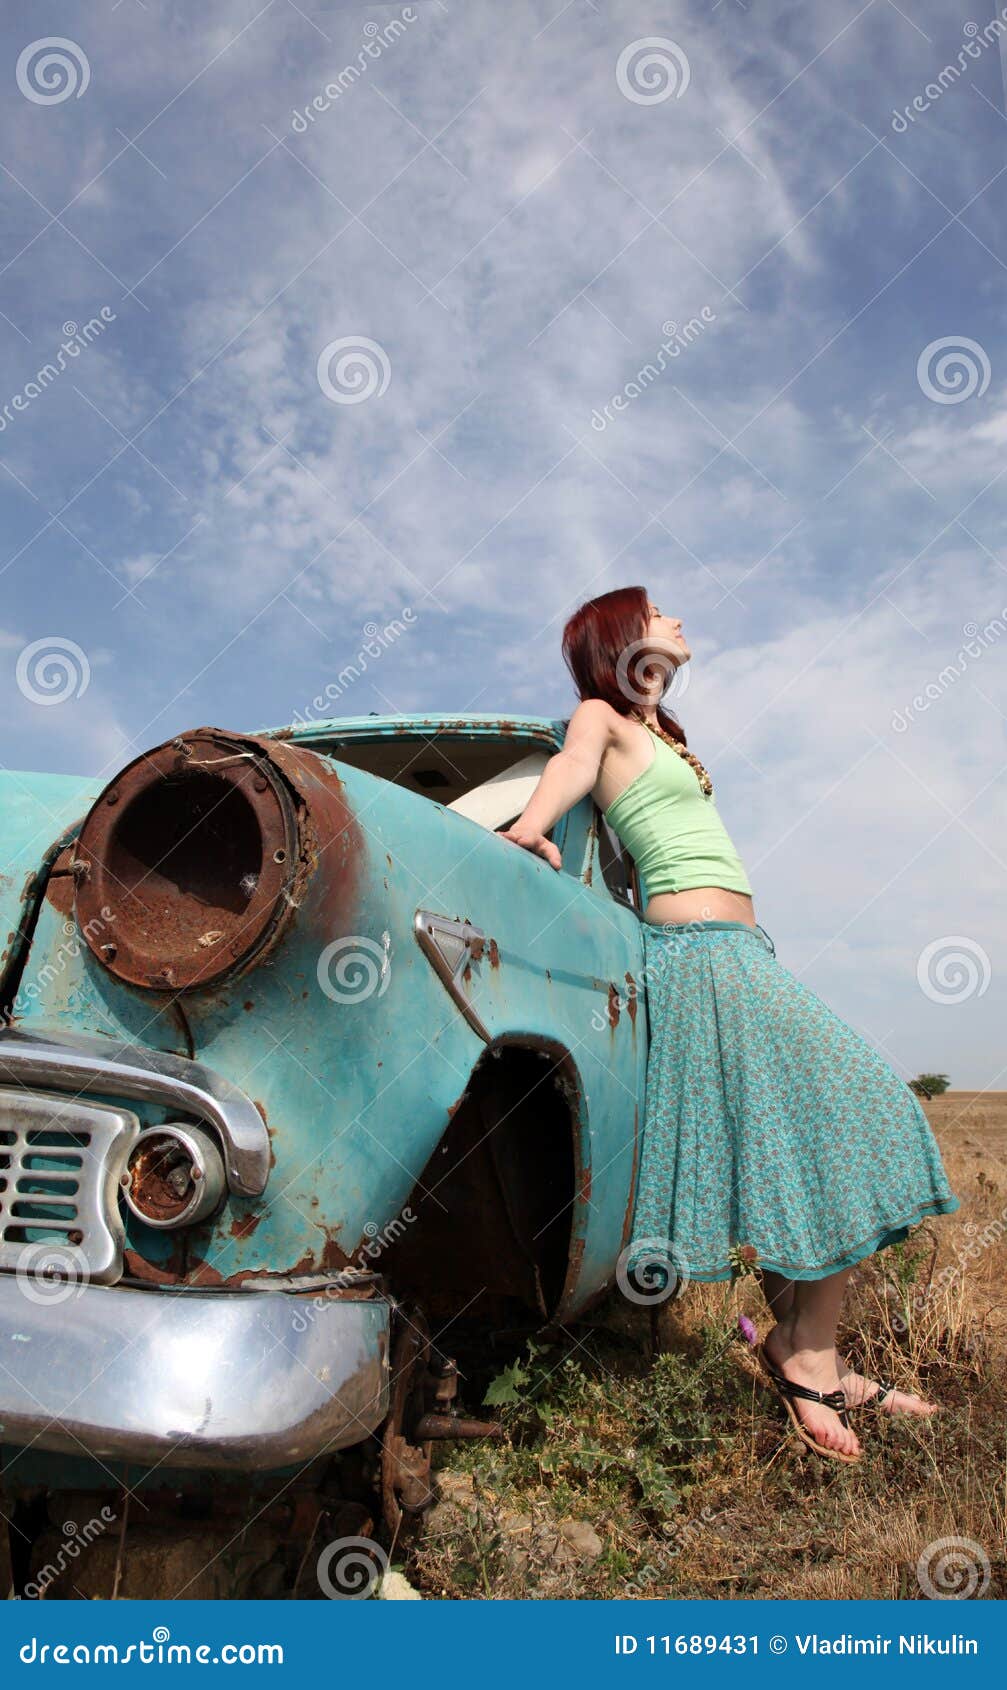 Girl Near Old Car Stock Image Image 11689431